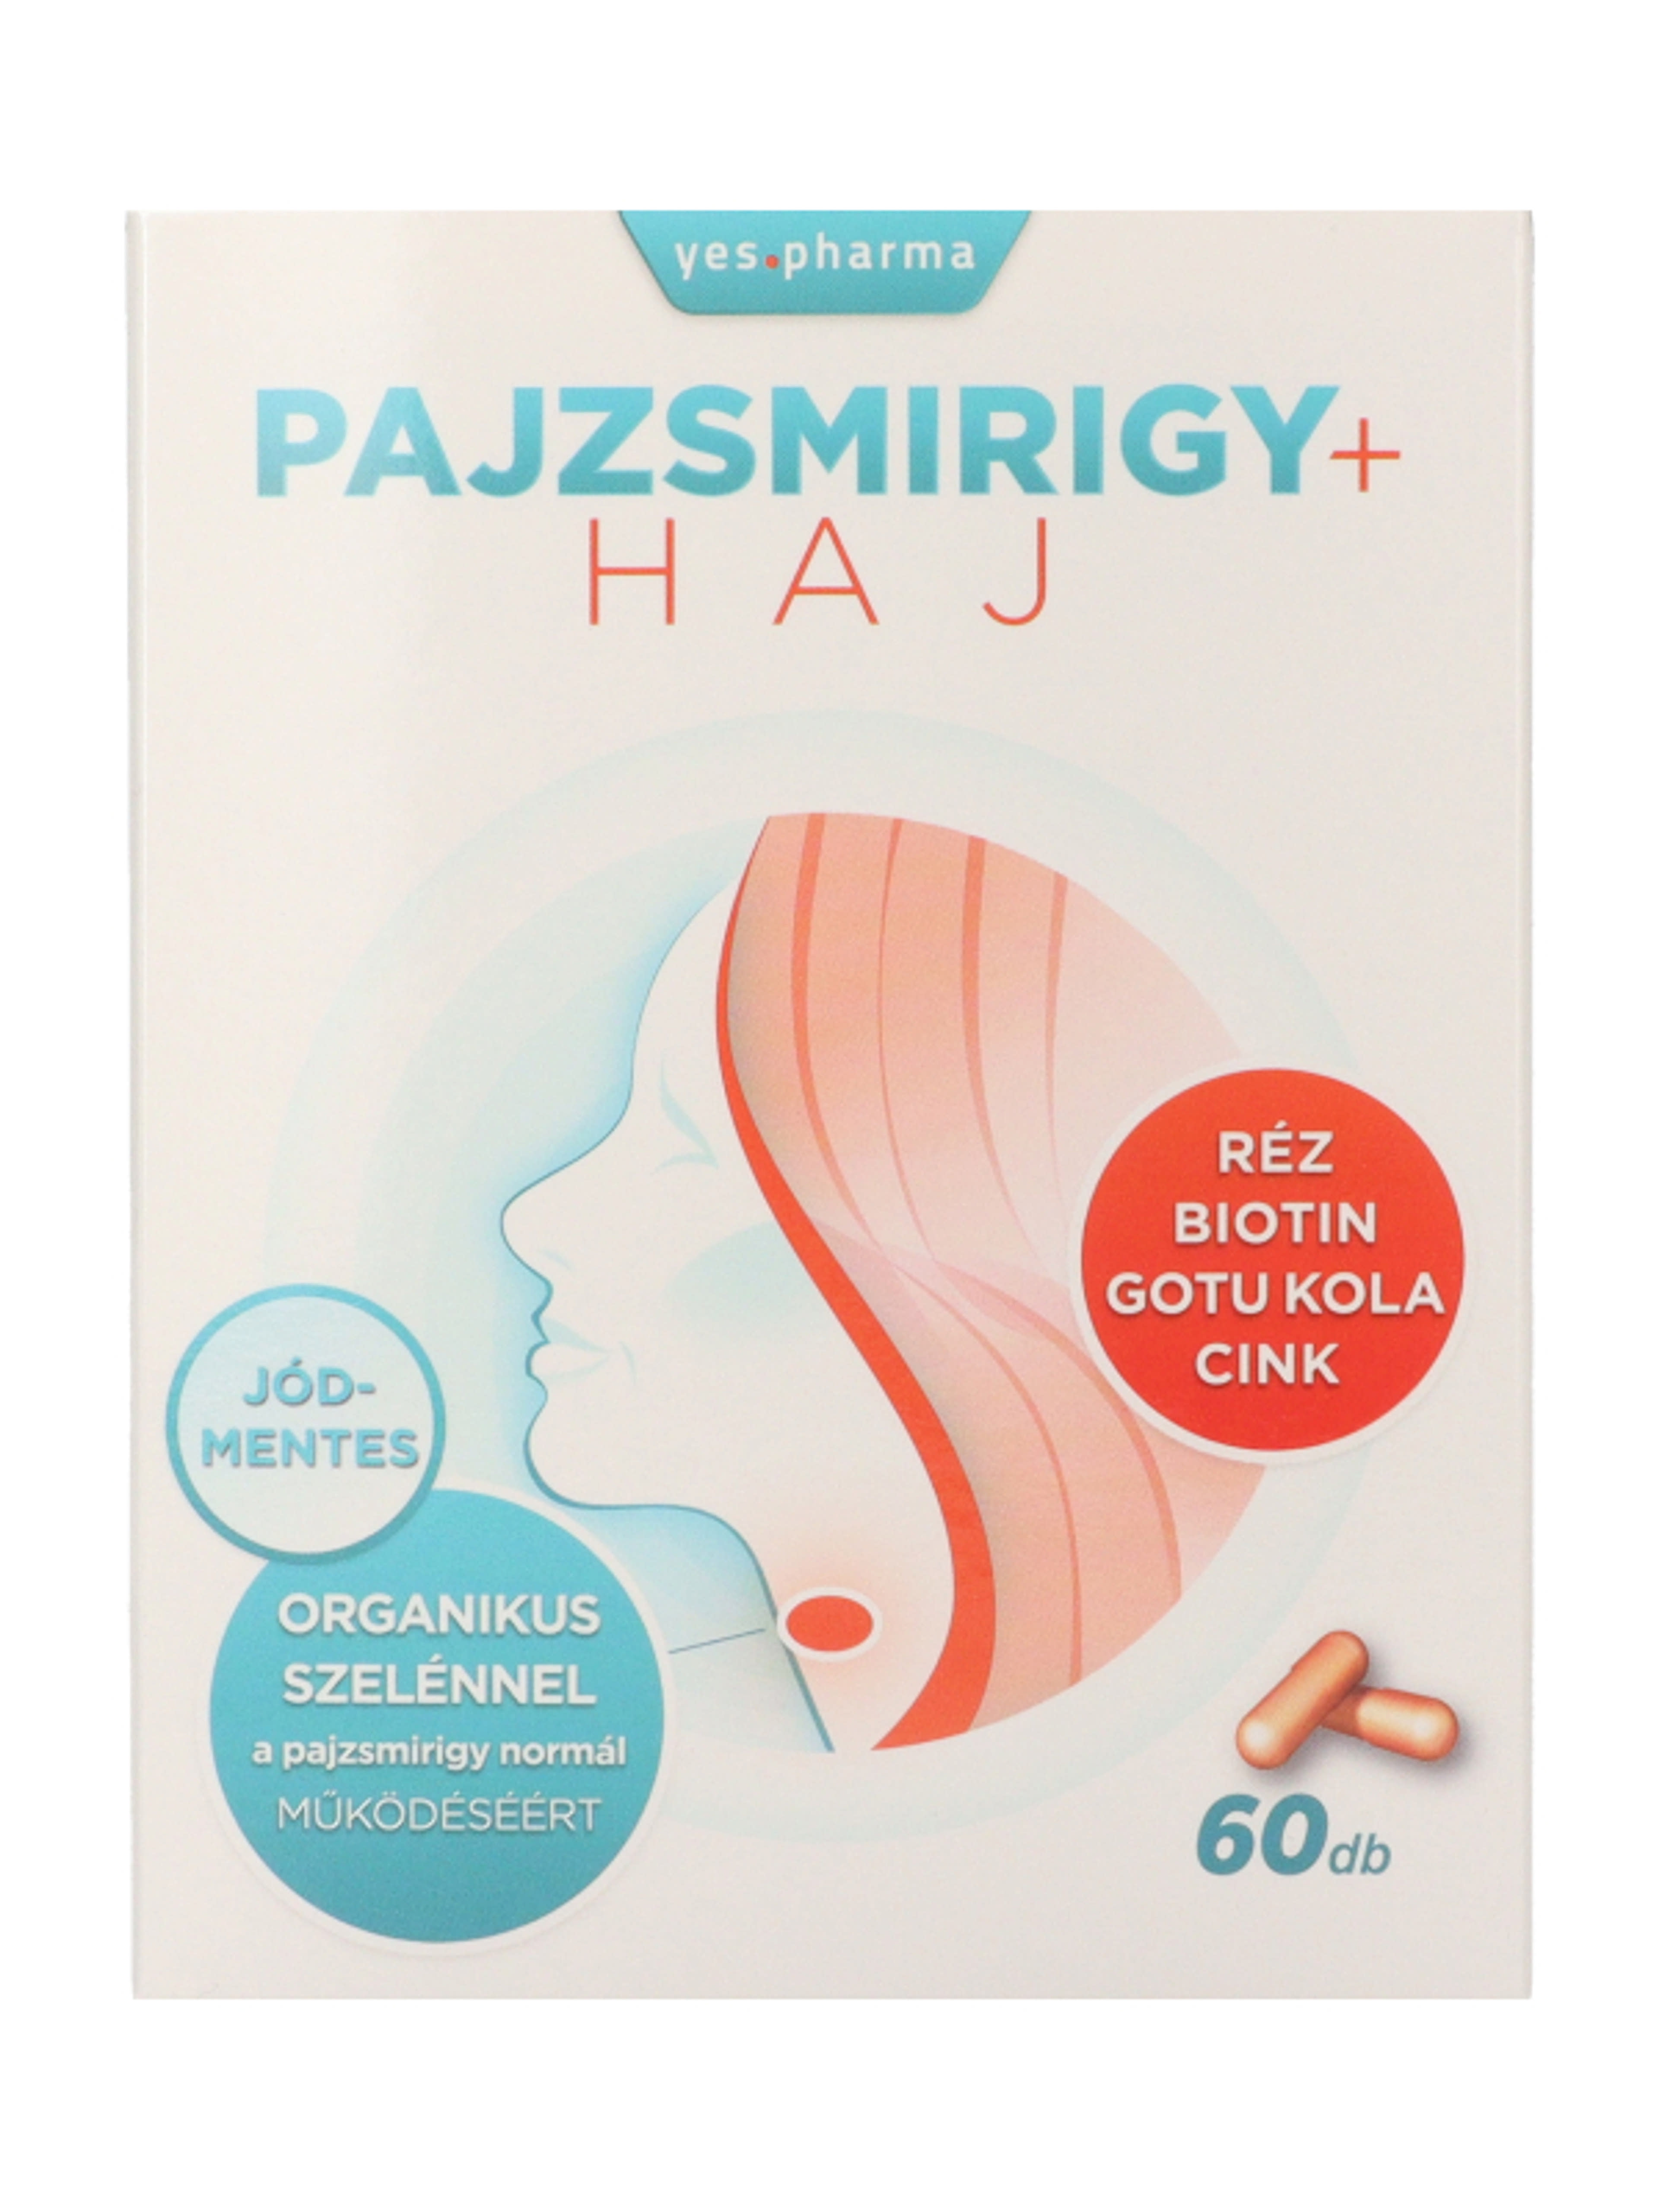 Yes Pharma Pajzsmirigy+ Haj Kapszula - 60 db-2